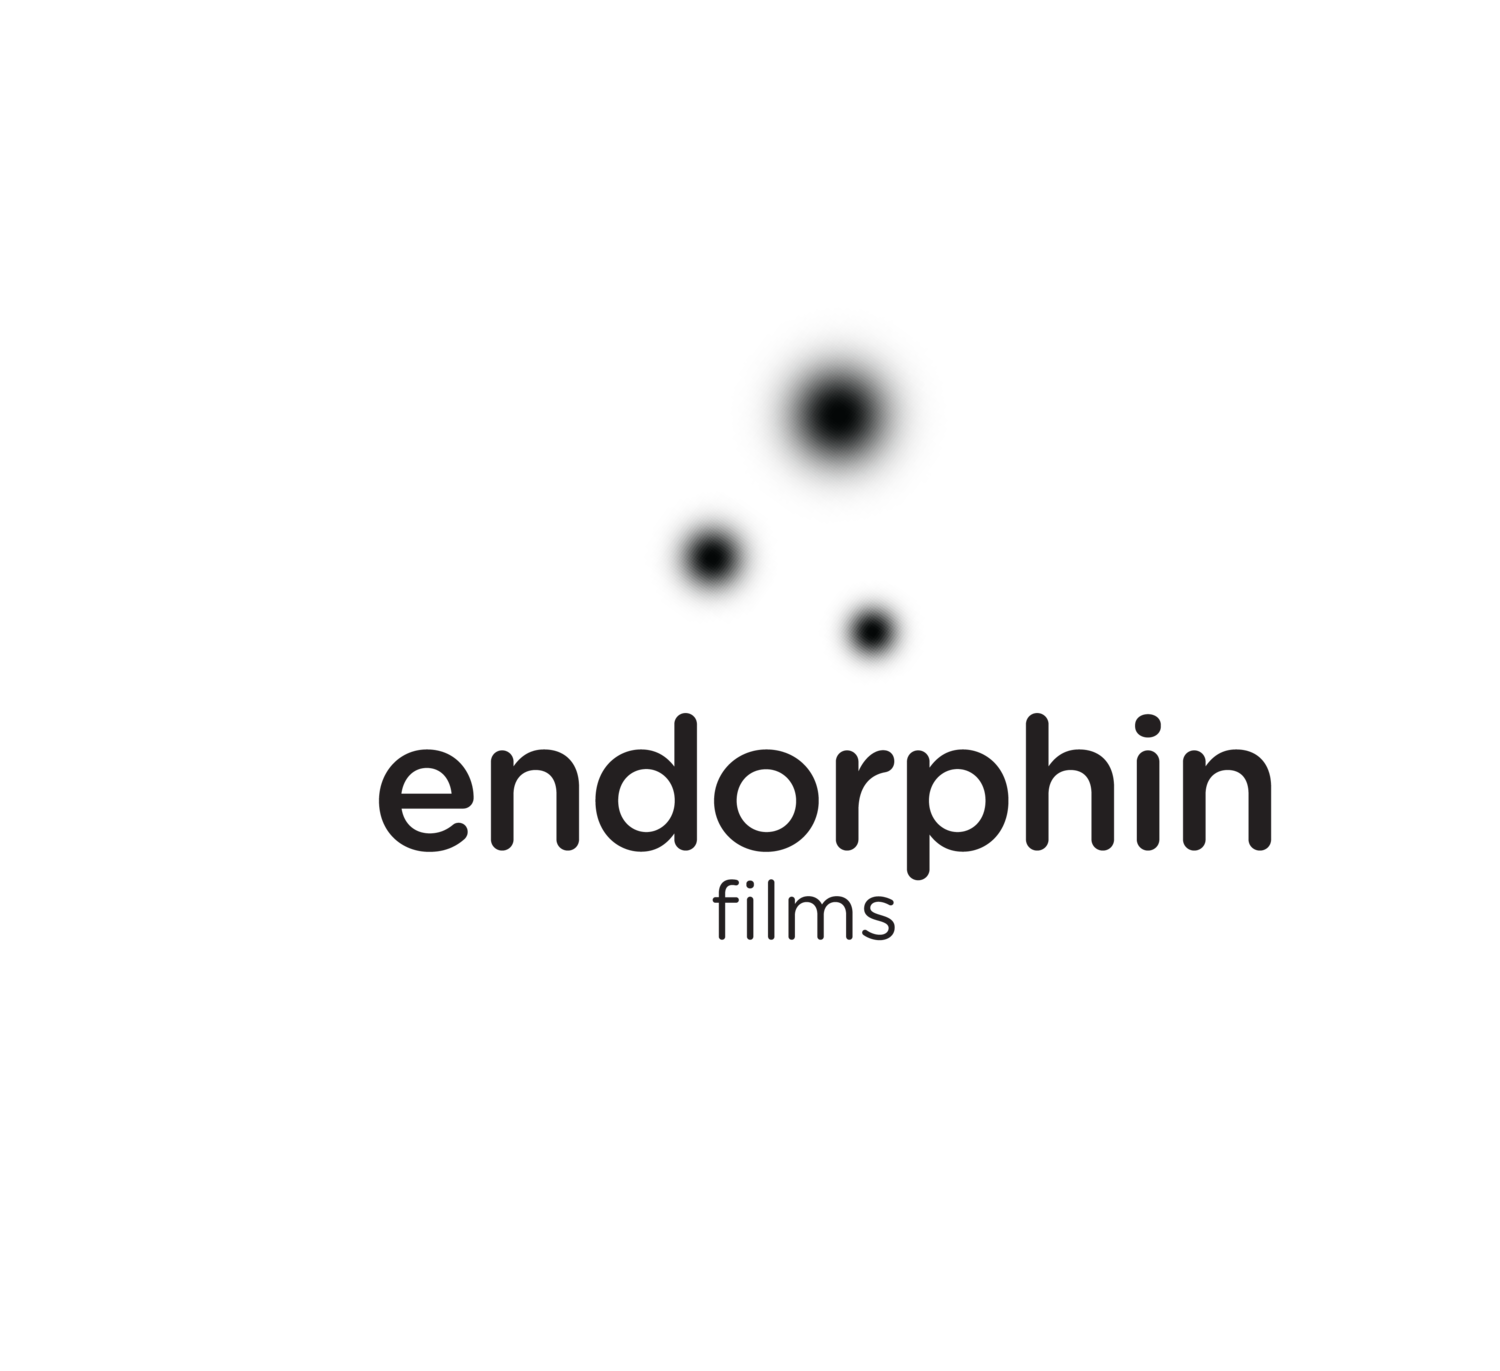 Endorphin Films